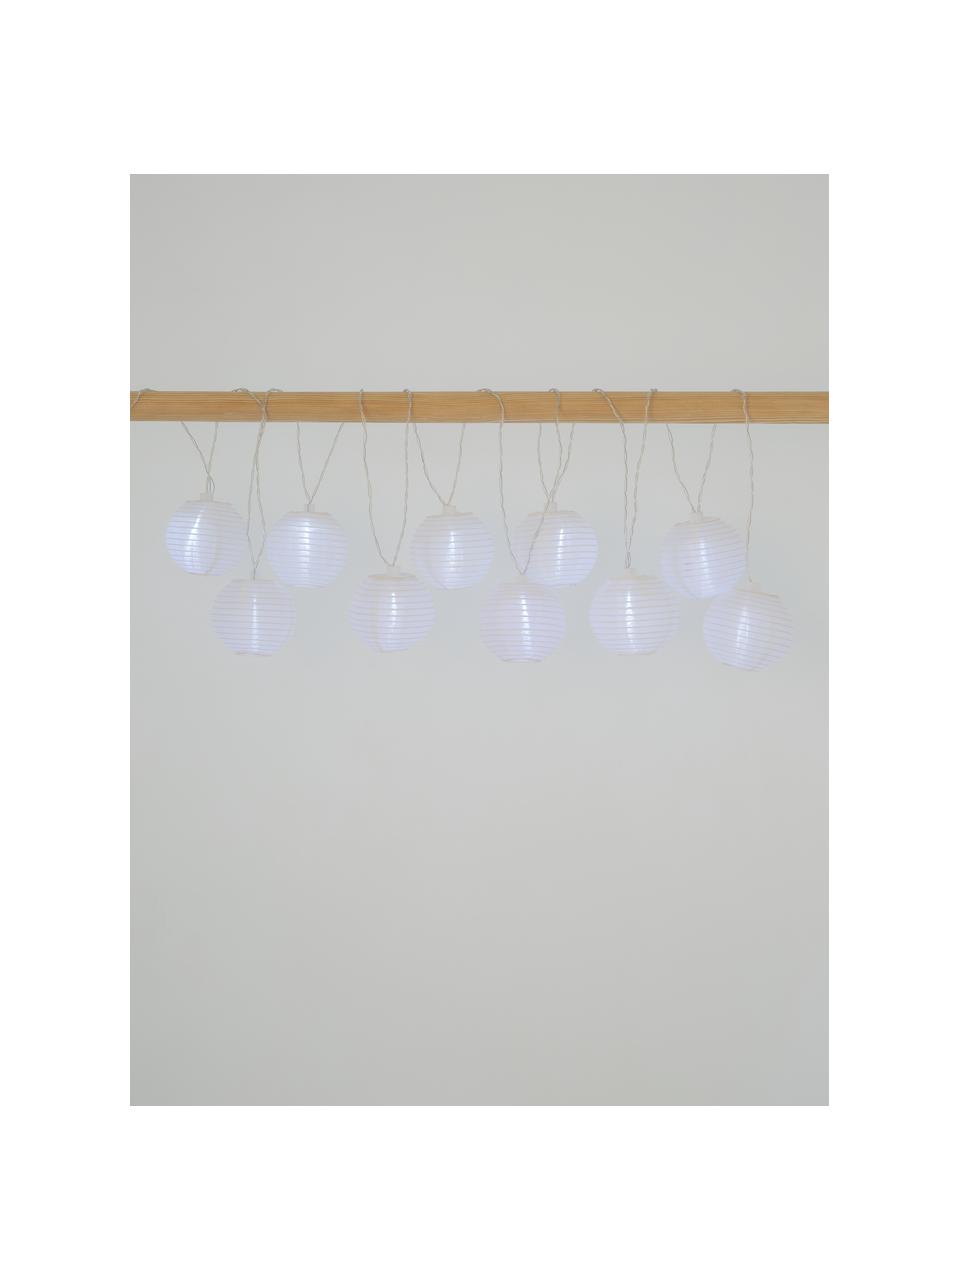 Solar LED-Lichterkette Ball, 270 cm, 10 Lampions, Lampions: Reispapier, Weiß, L 270 cm